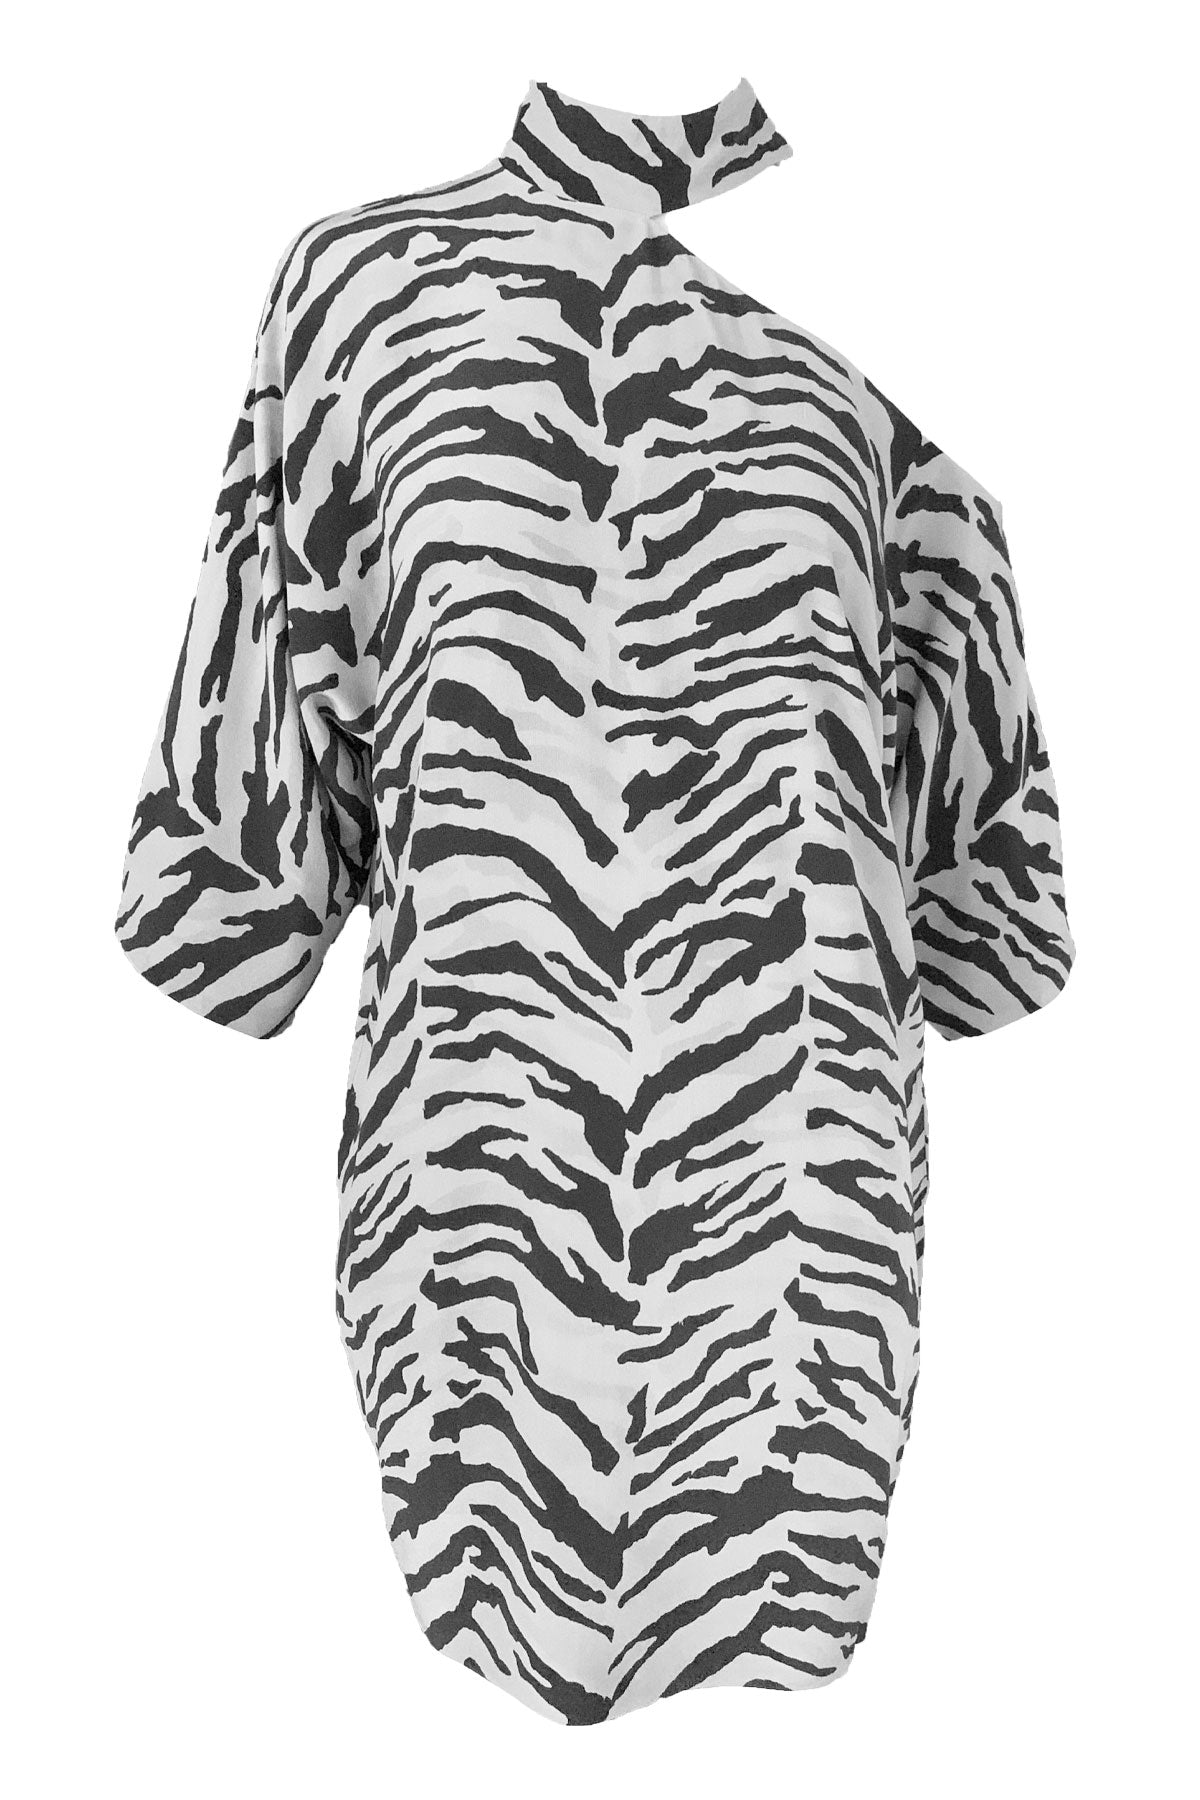 Julia Neck Cut Out Dress Grey Zebra - shop-olivia.com